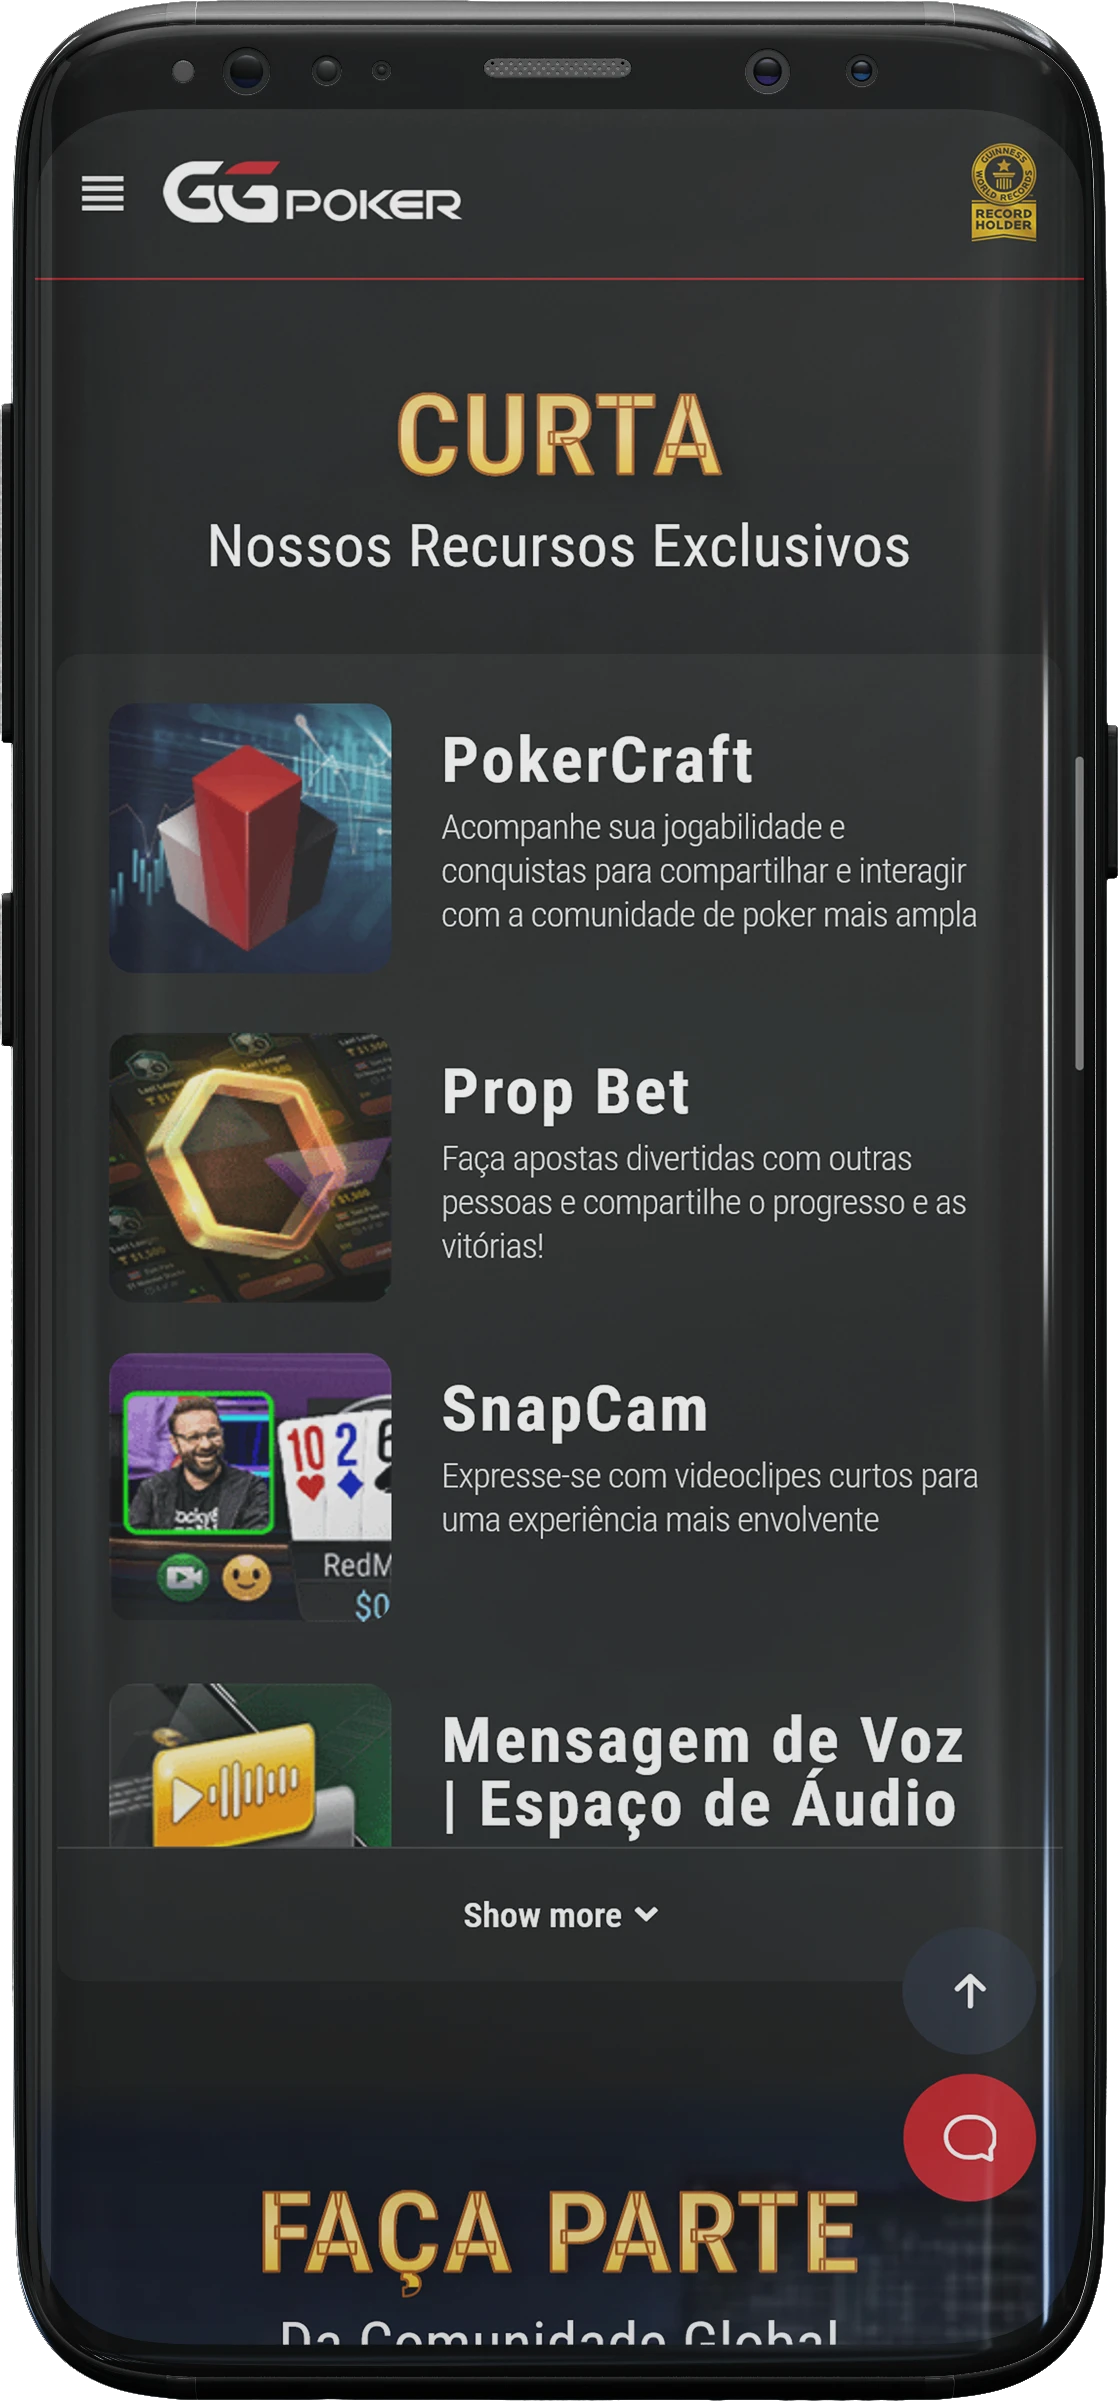 Captura de tela dos jogos exclusivos no aplicativo GG Poker